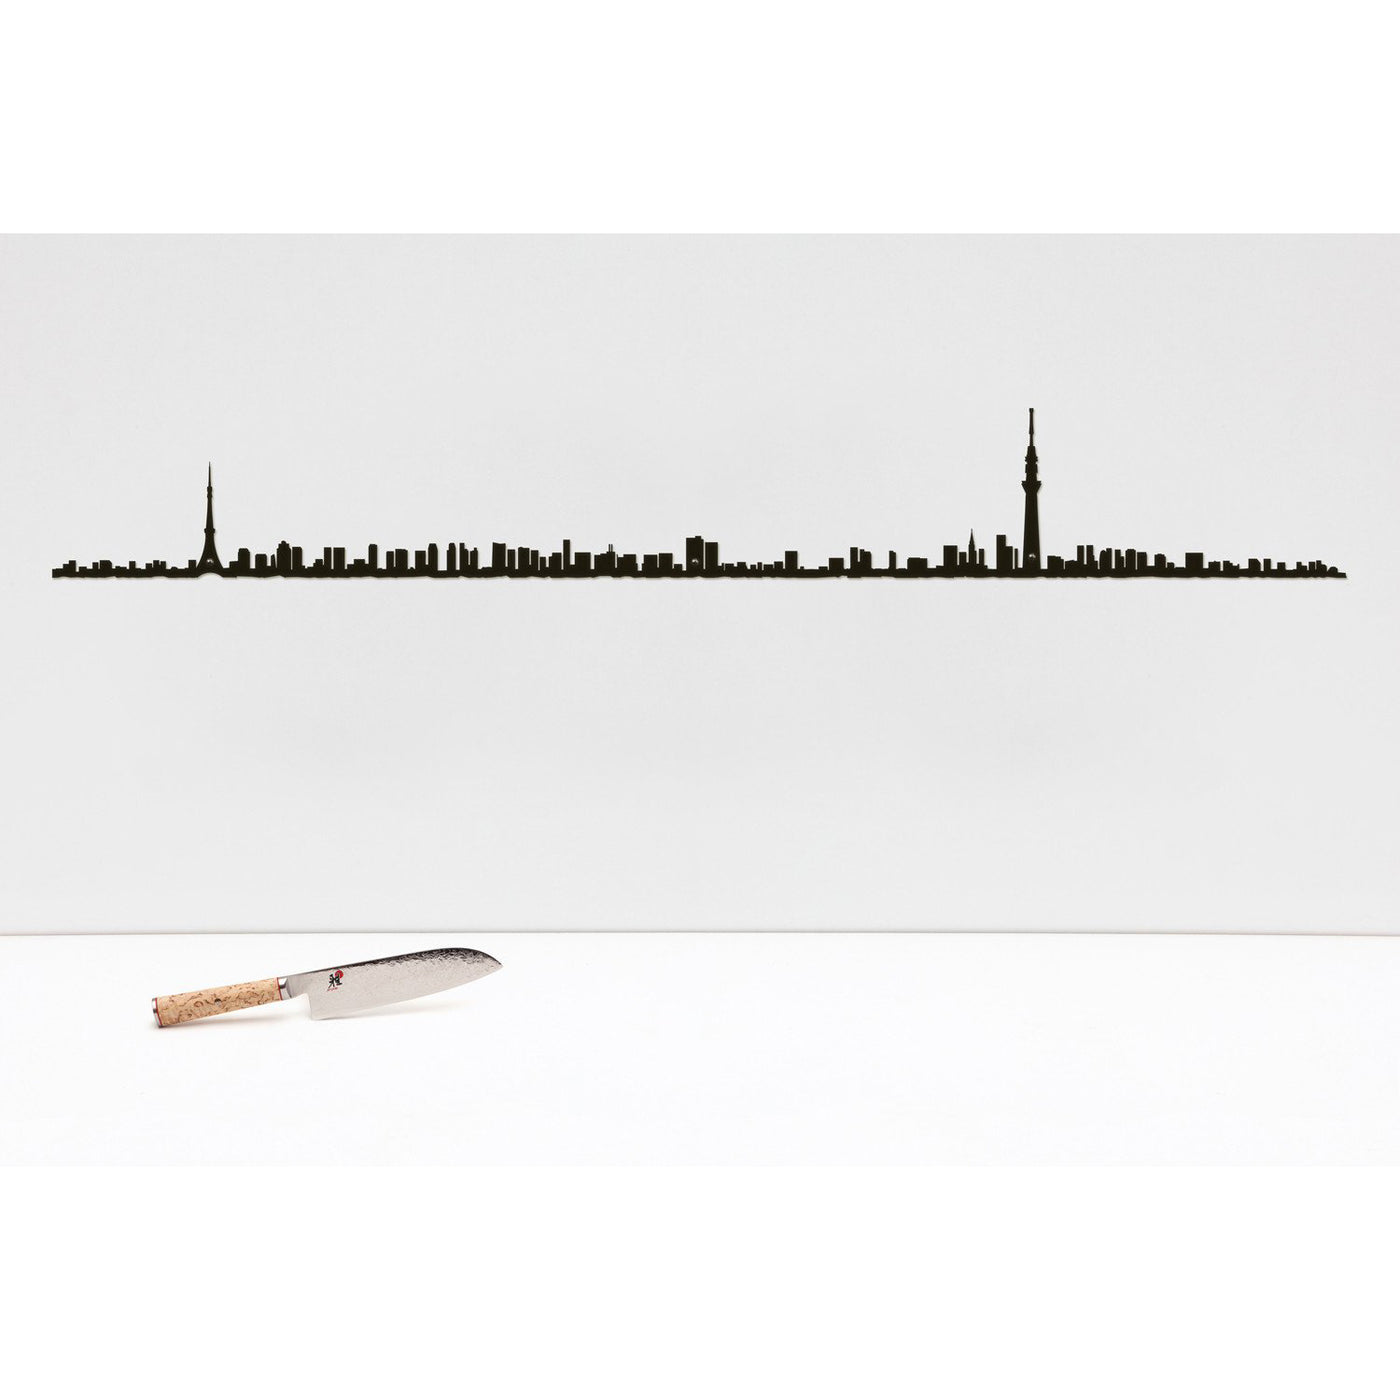 49.25” XL City Skyline Silhouette - Tokyo by The Line